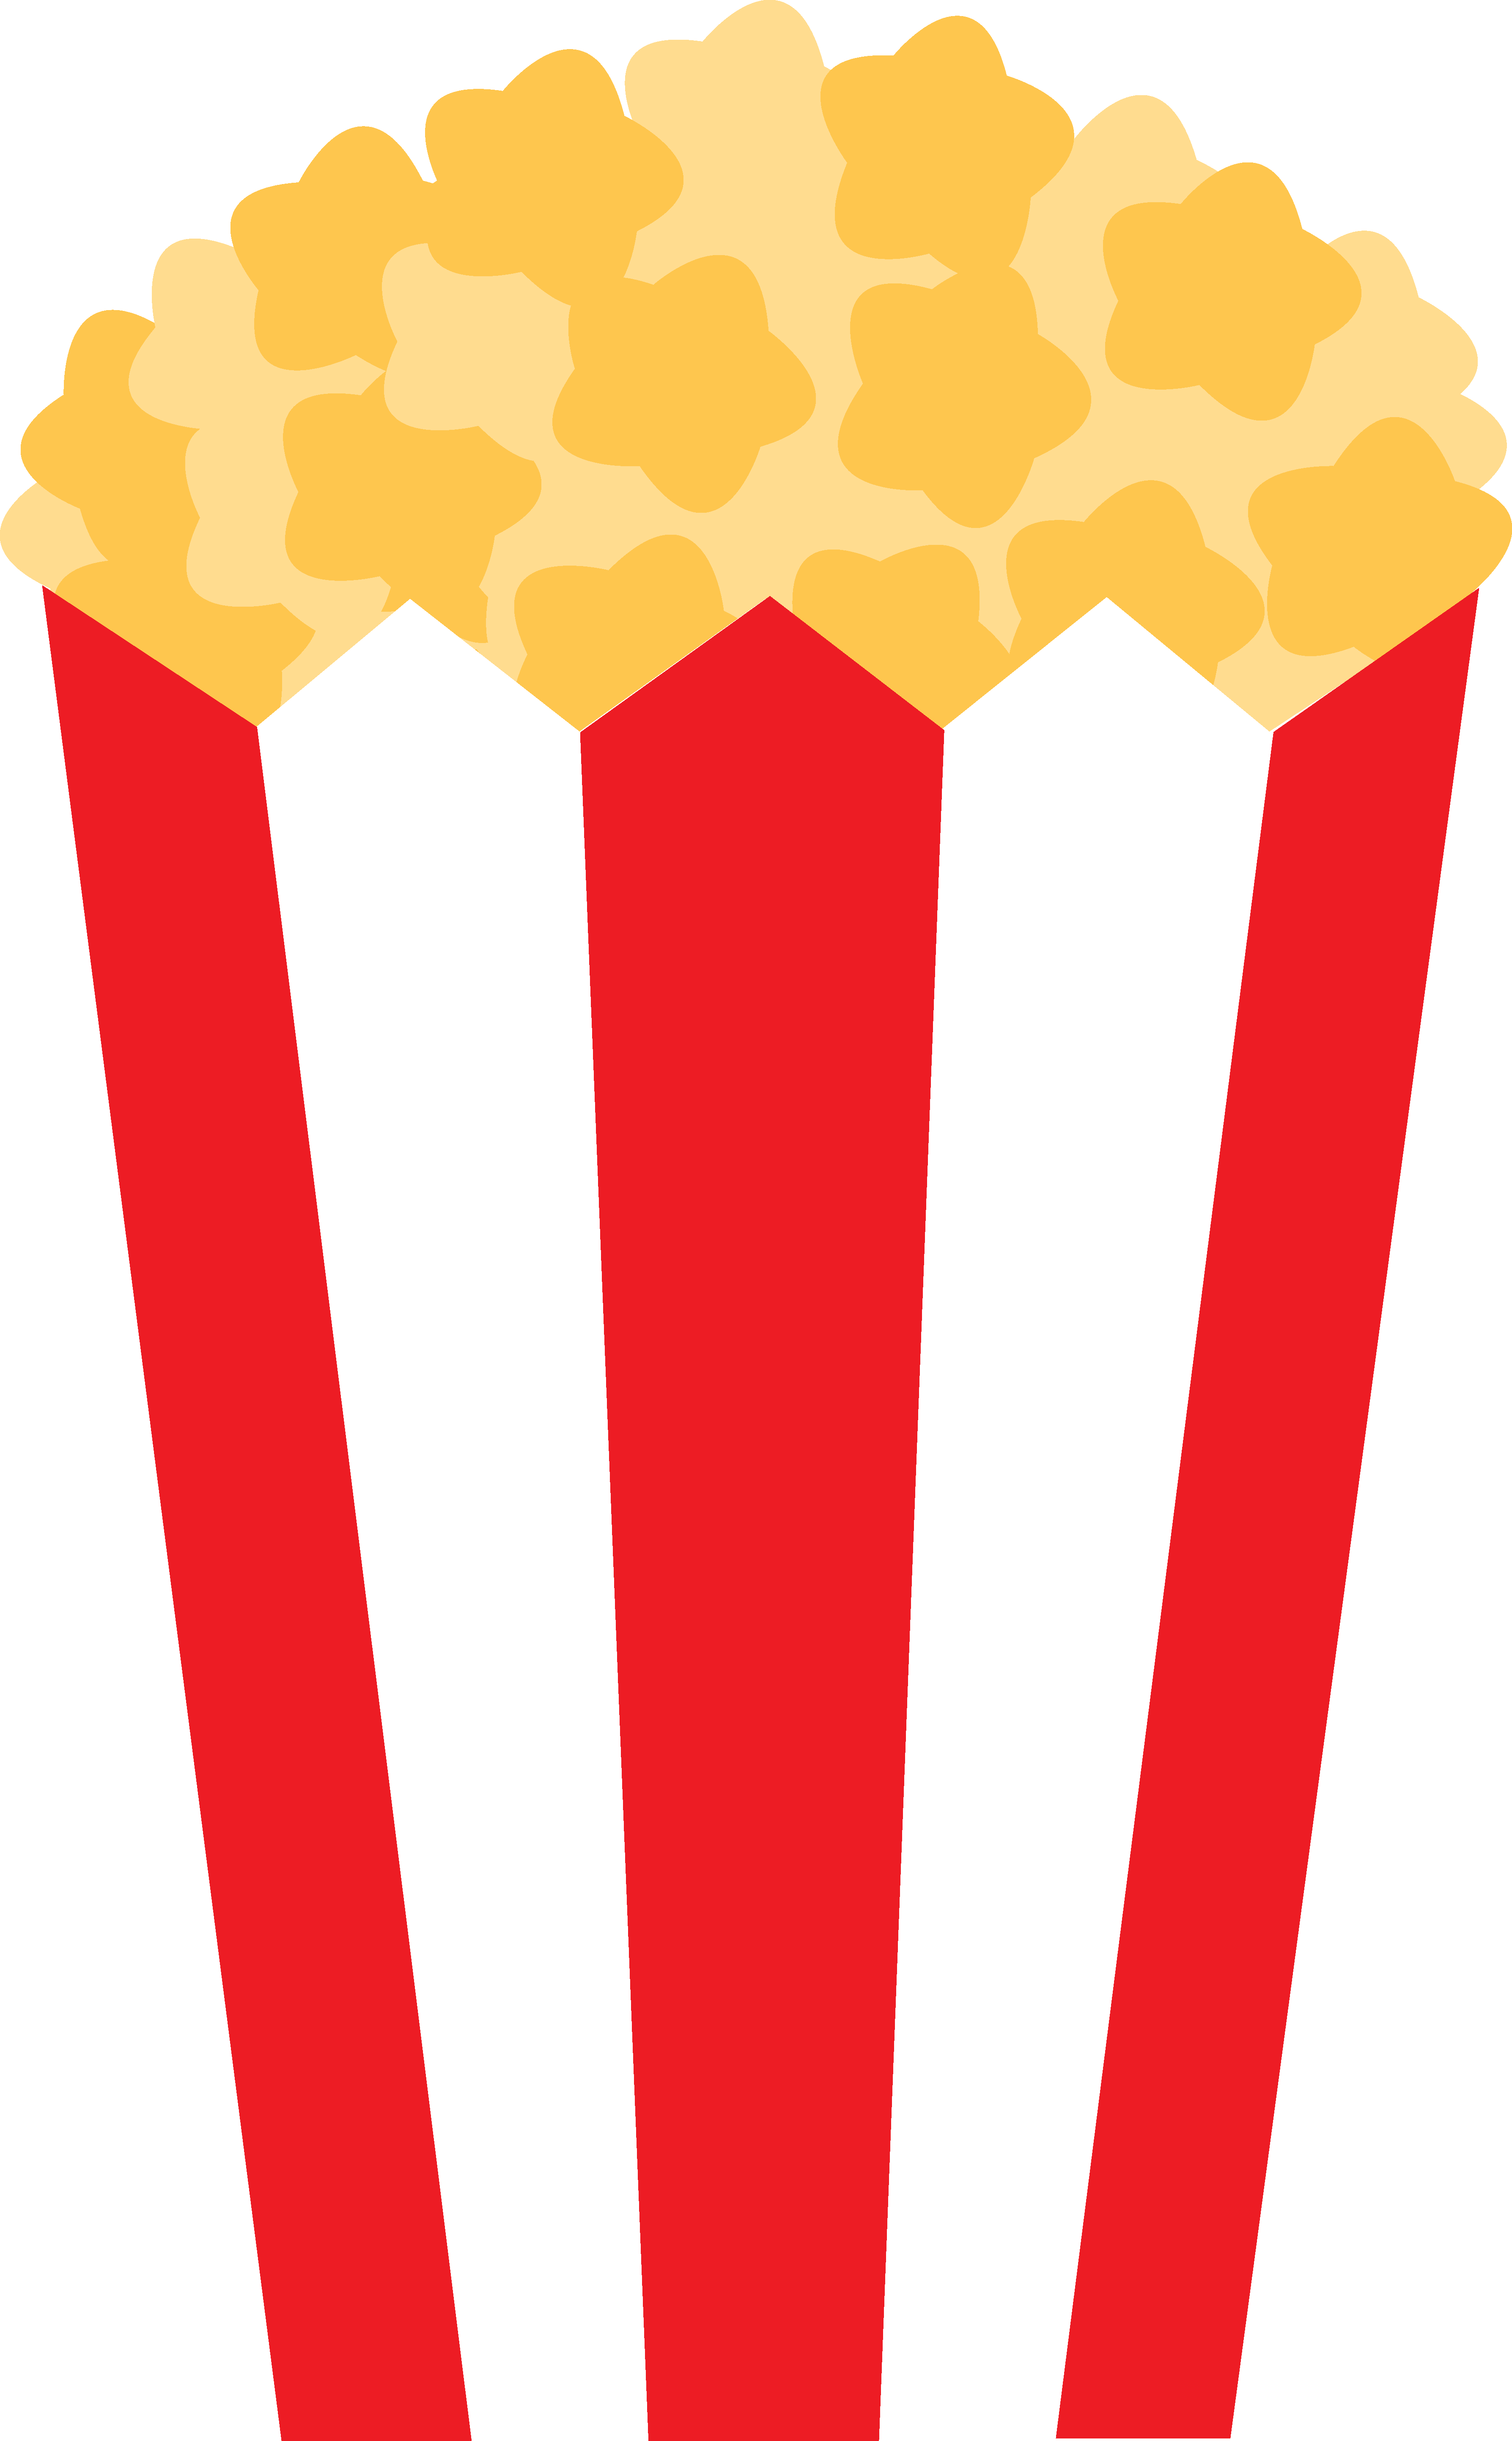 Bag of Popcorn - Free Clip Art